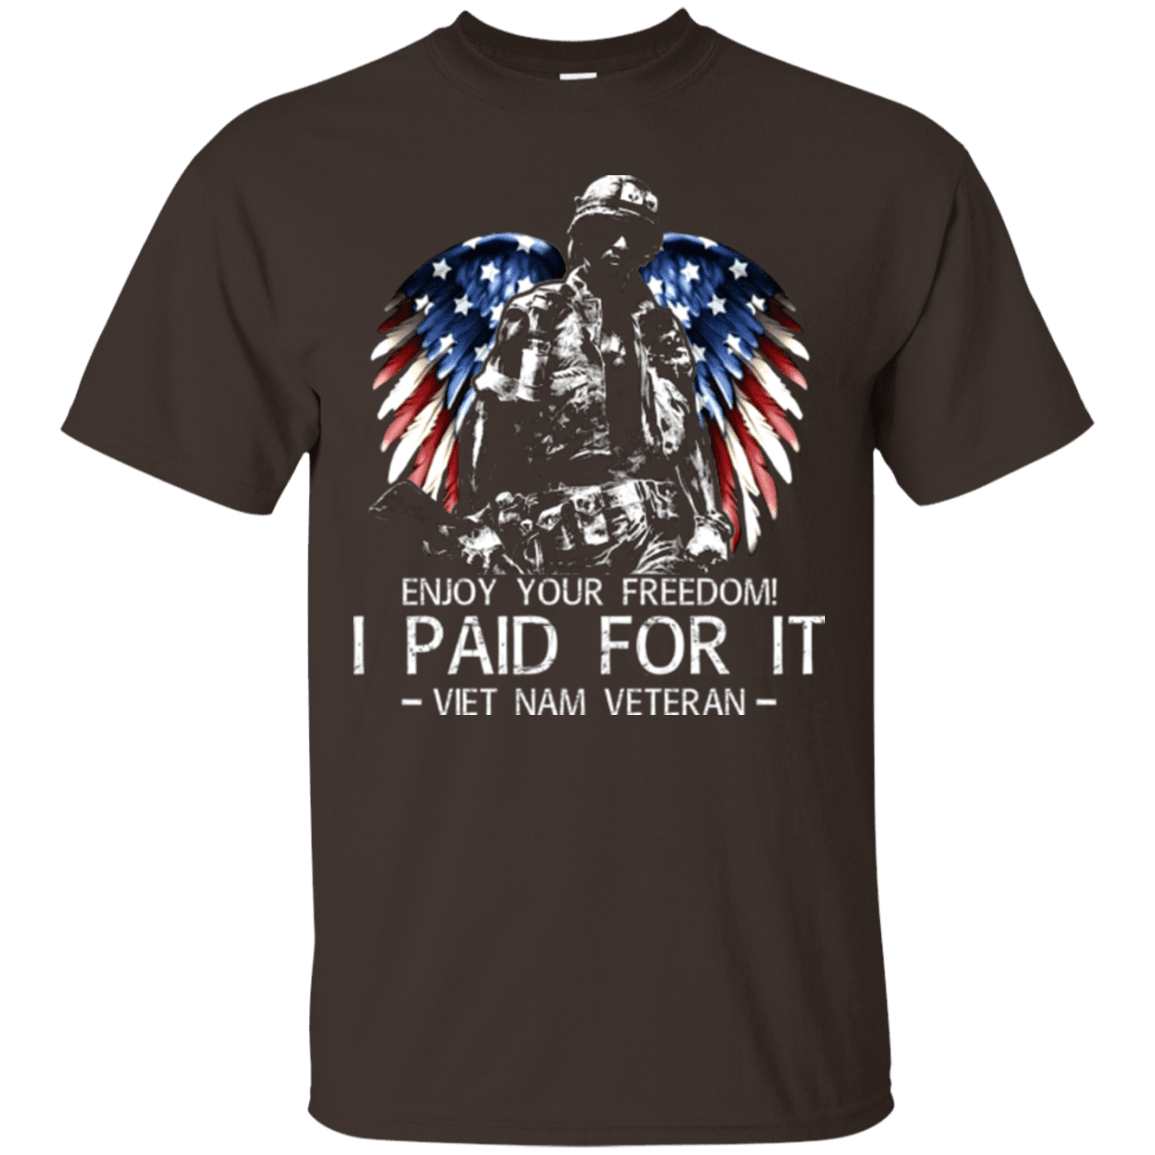 Military T-Shirt "Vietnam Veteran - Enjoy your freedom I paid for it Men" Front-TShirt-General-Veterans Nation